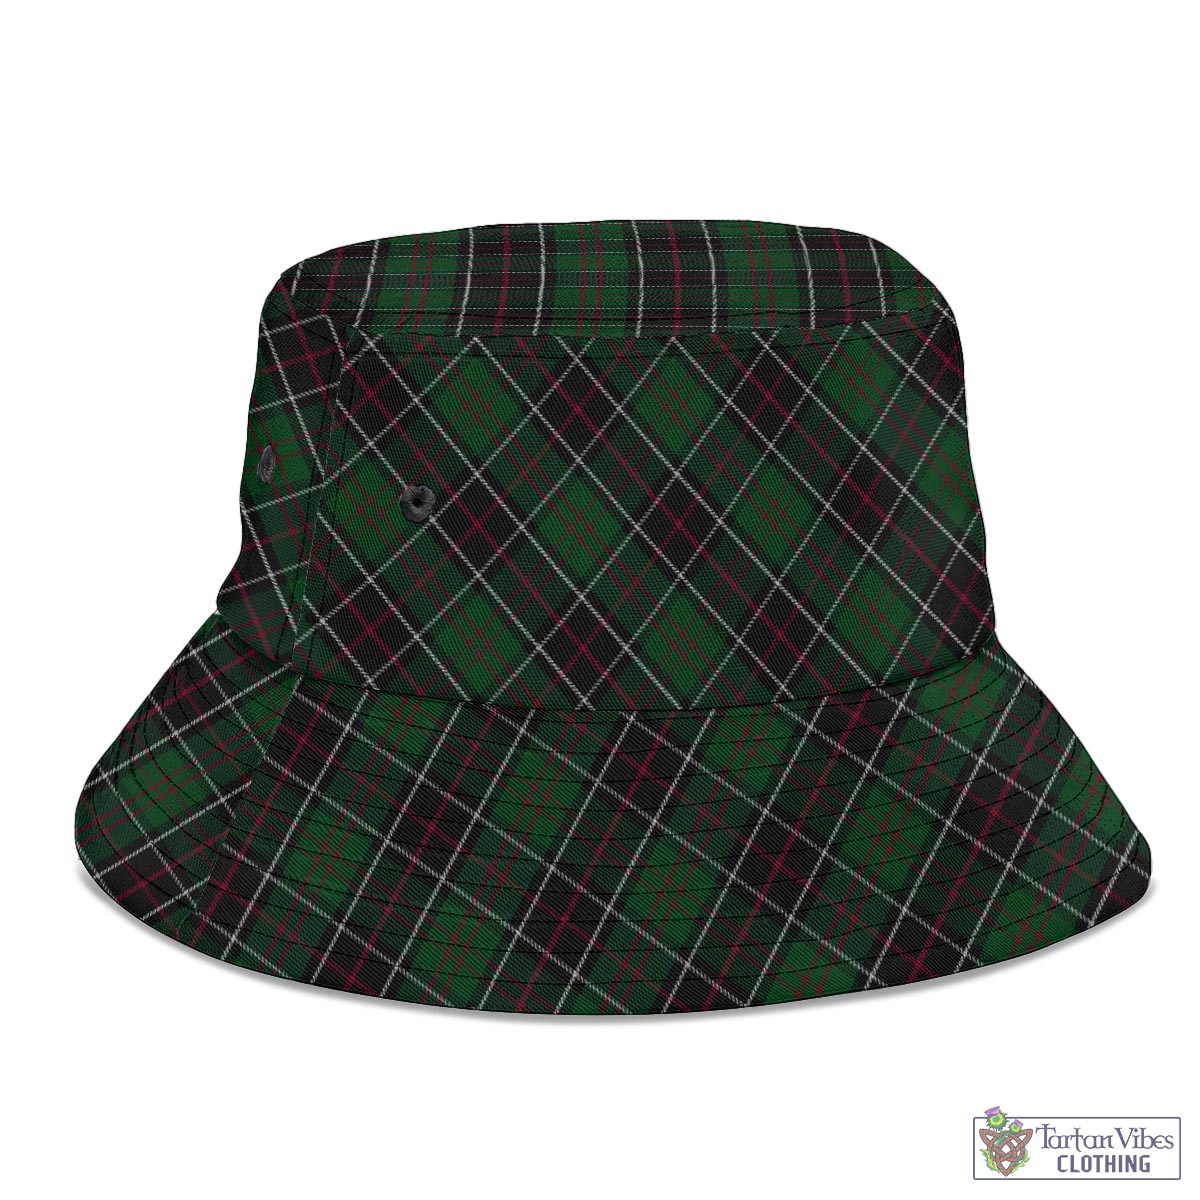 Tartan Vibes Clothing Sinclair Hunting Tartan Bucket Hat